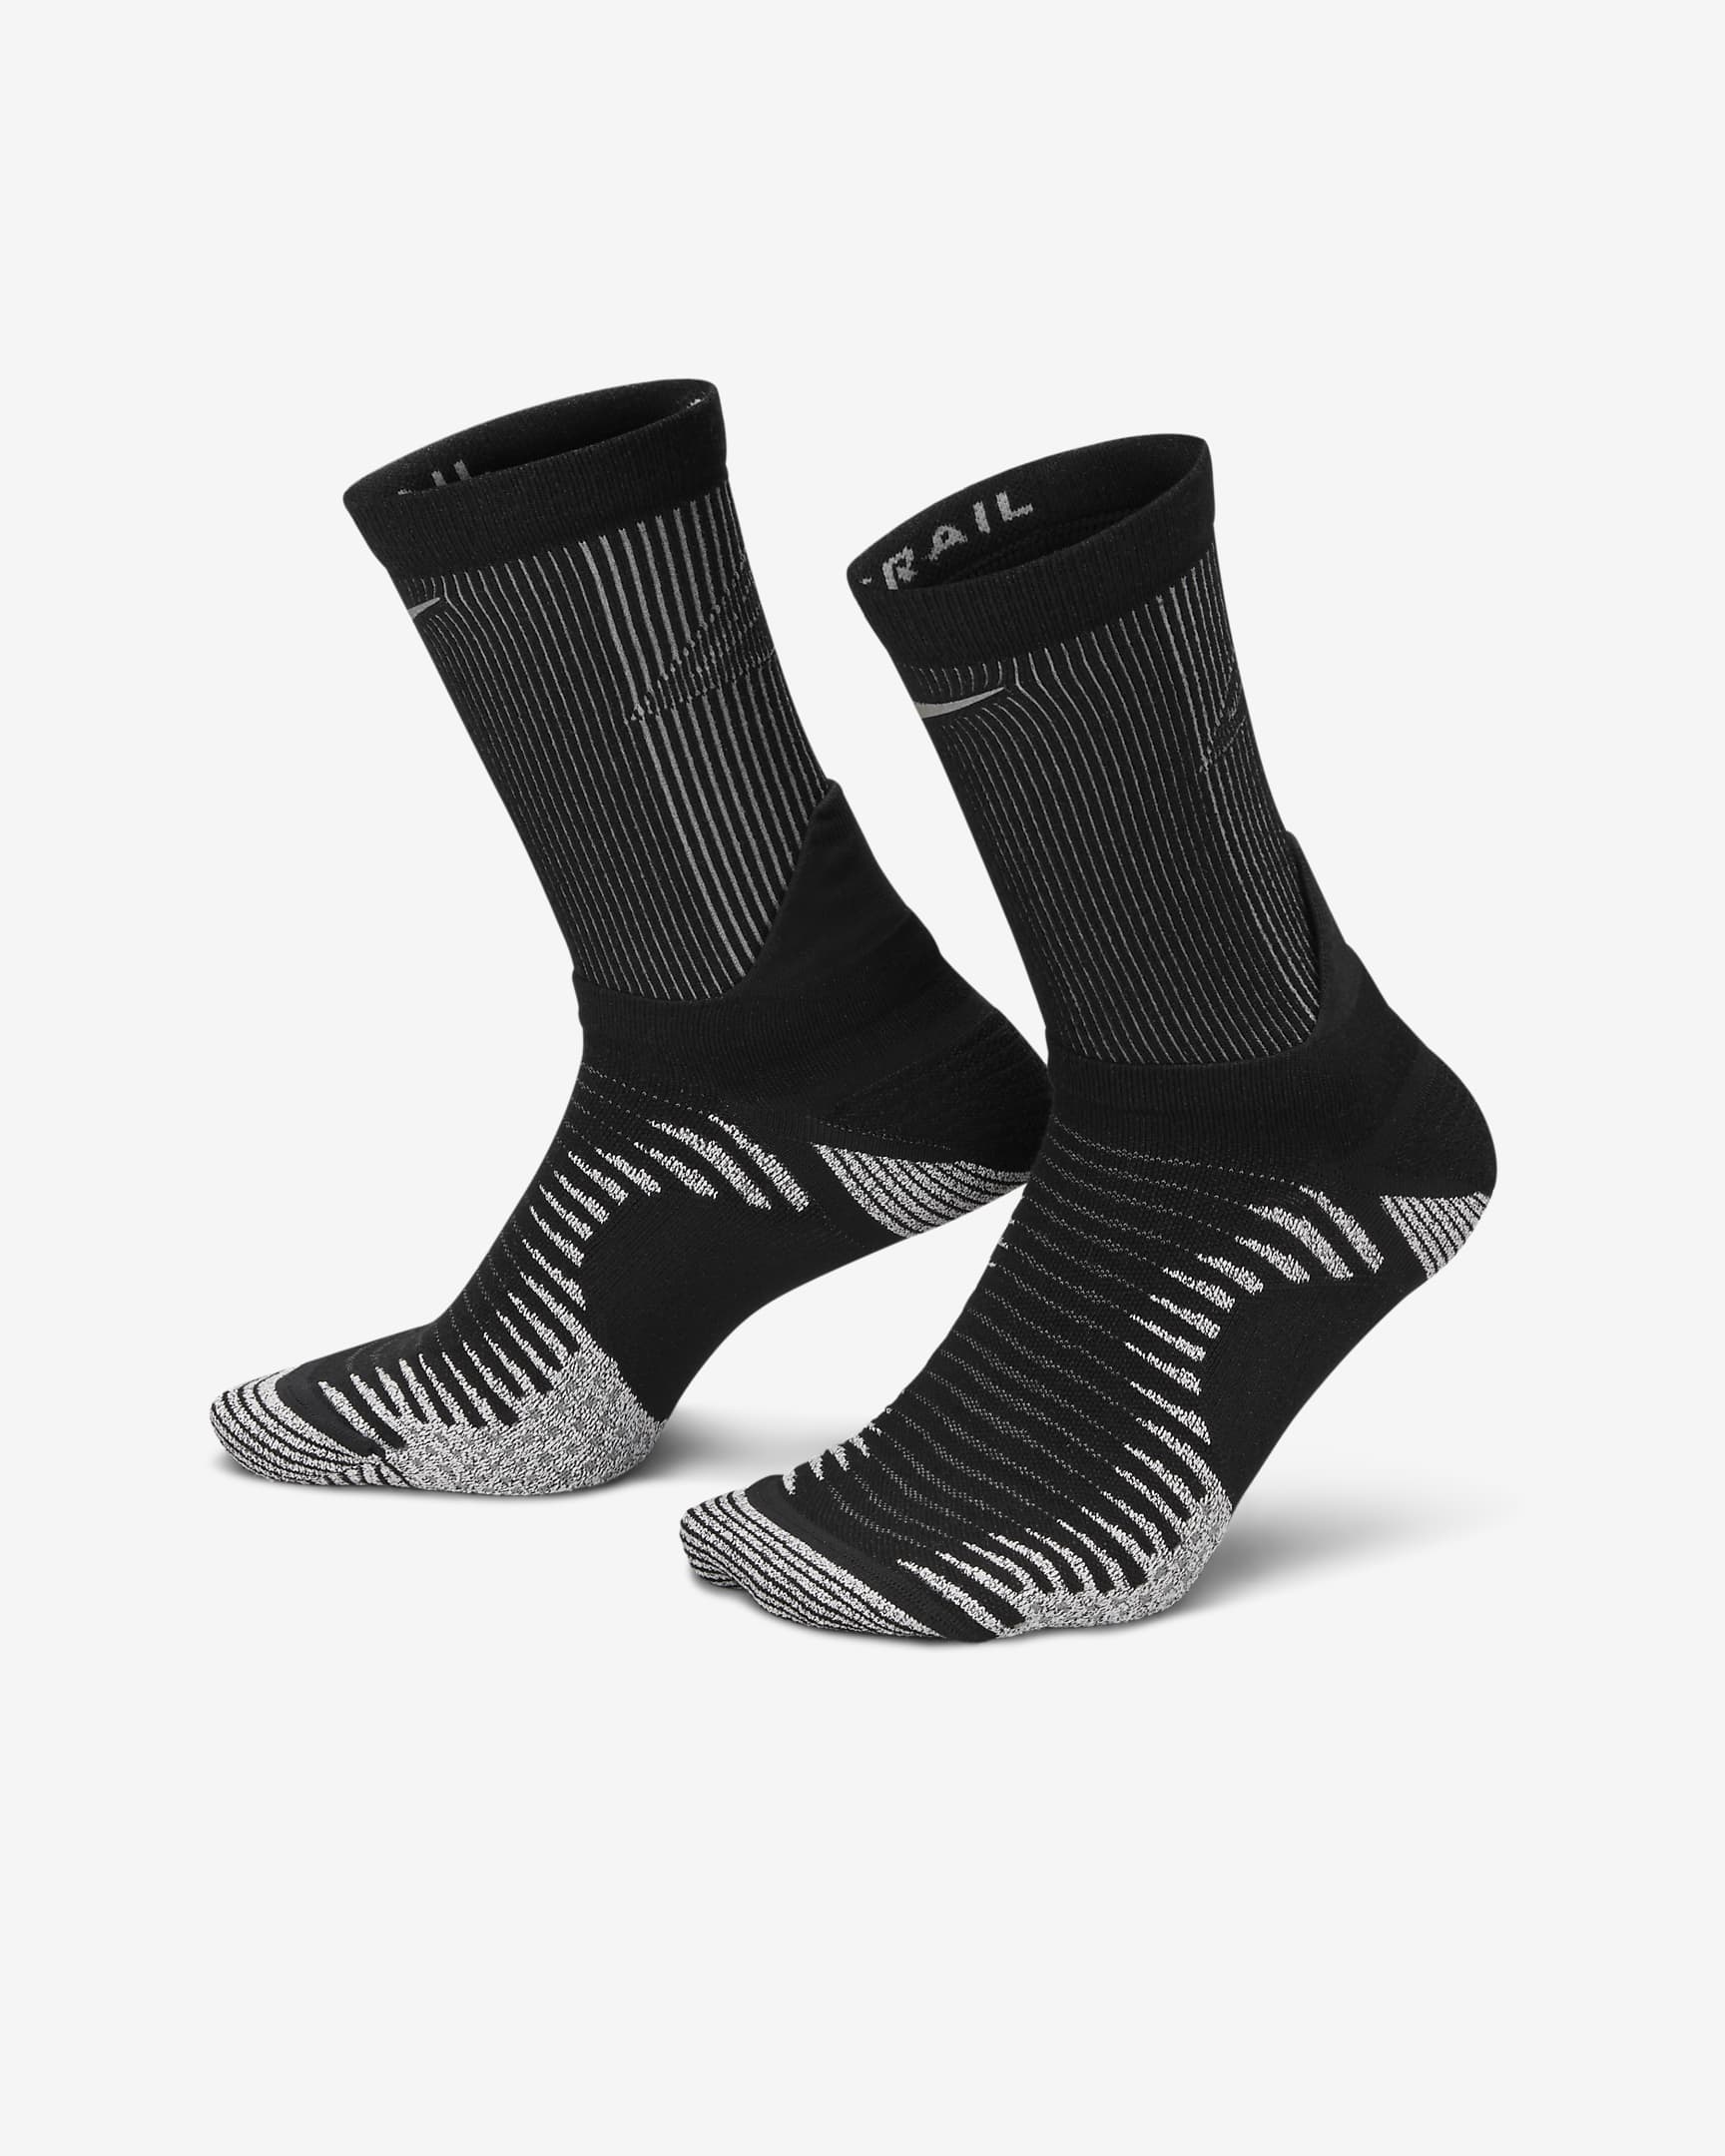 Nike Dri-FIT Trail Running Crew Socks - Black/Black/Anthracite/Anthracite